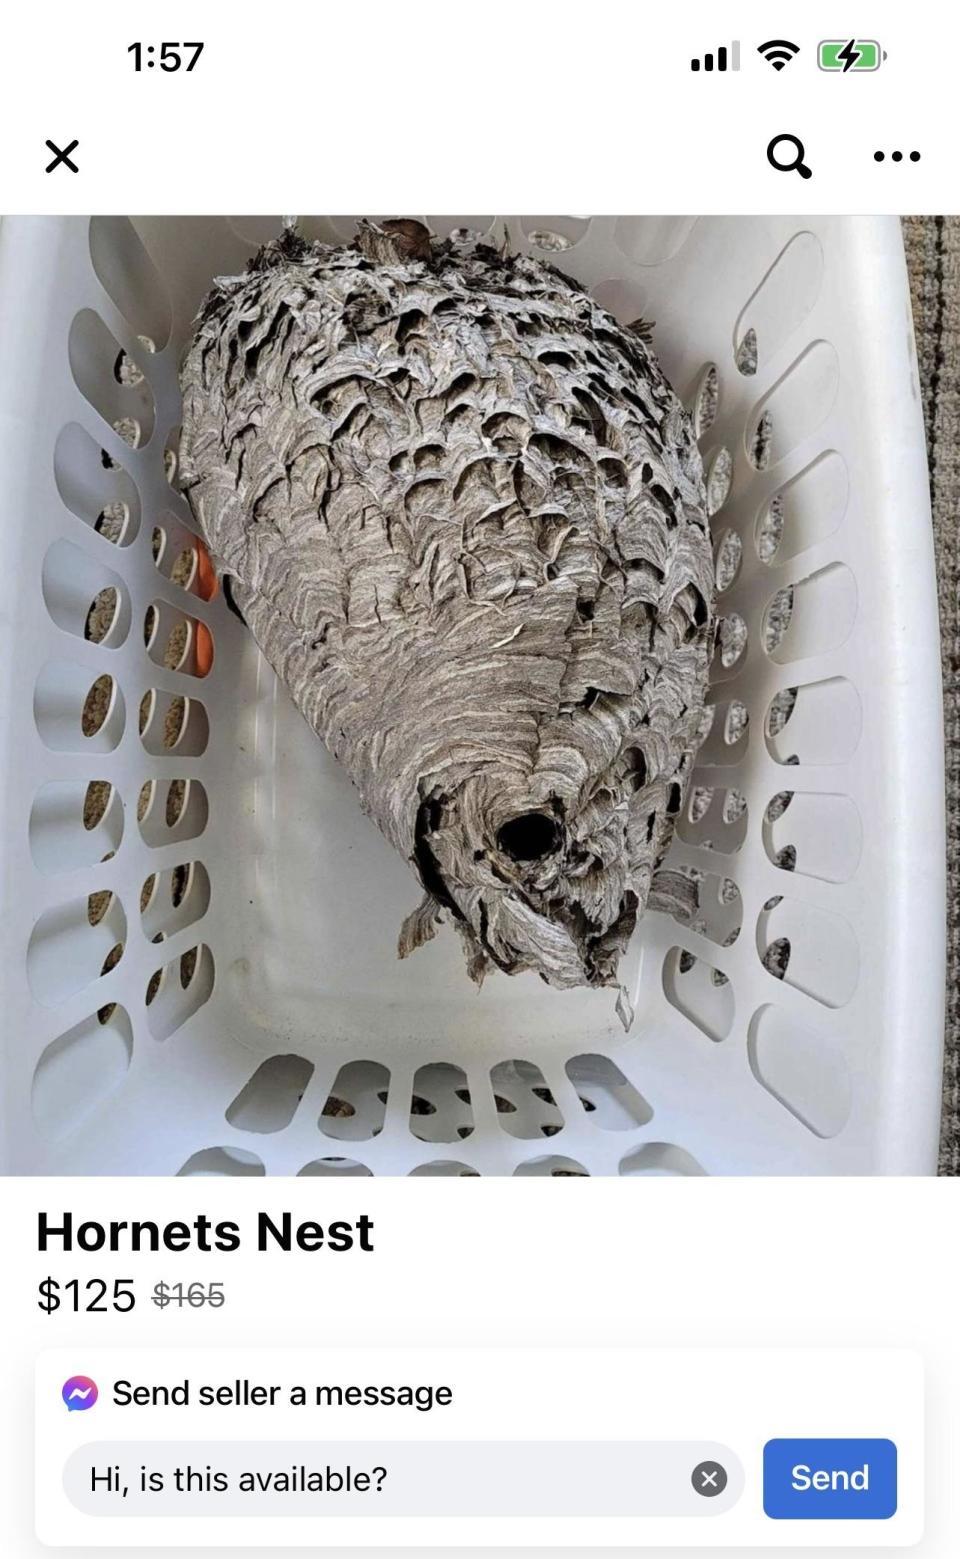 Large hornets' nest inside a white plastic basket for sale, displayed on an online marketplace